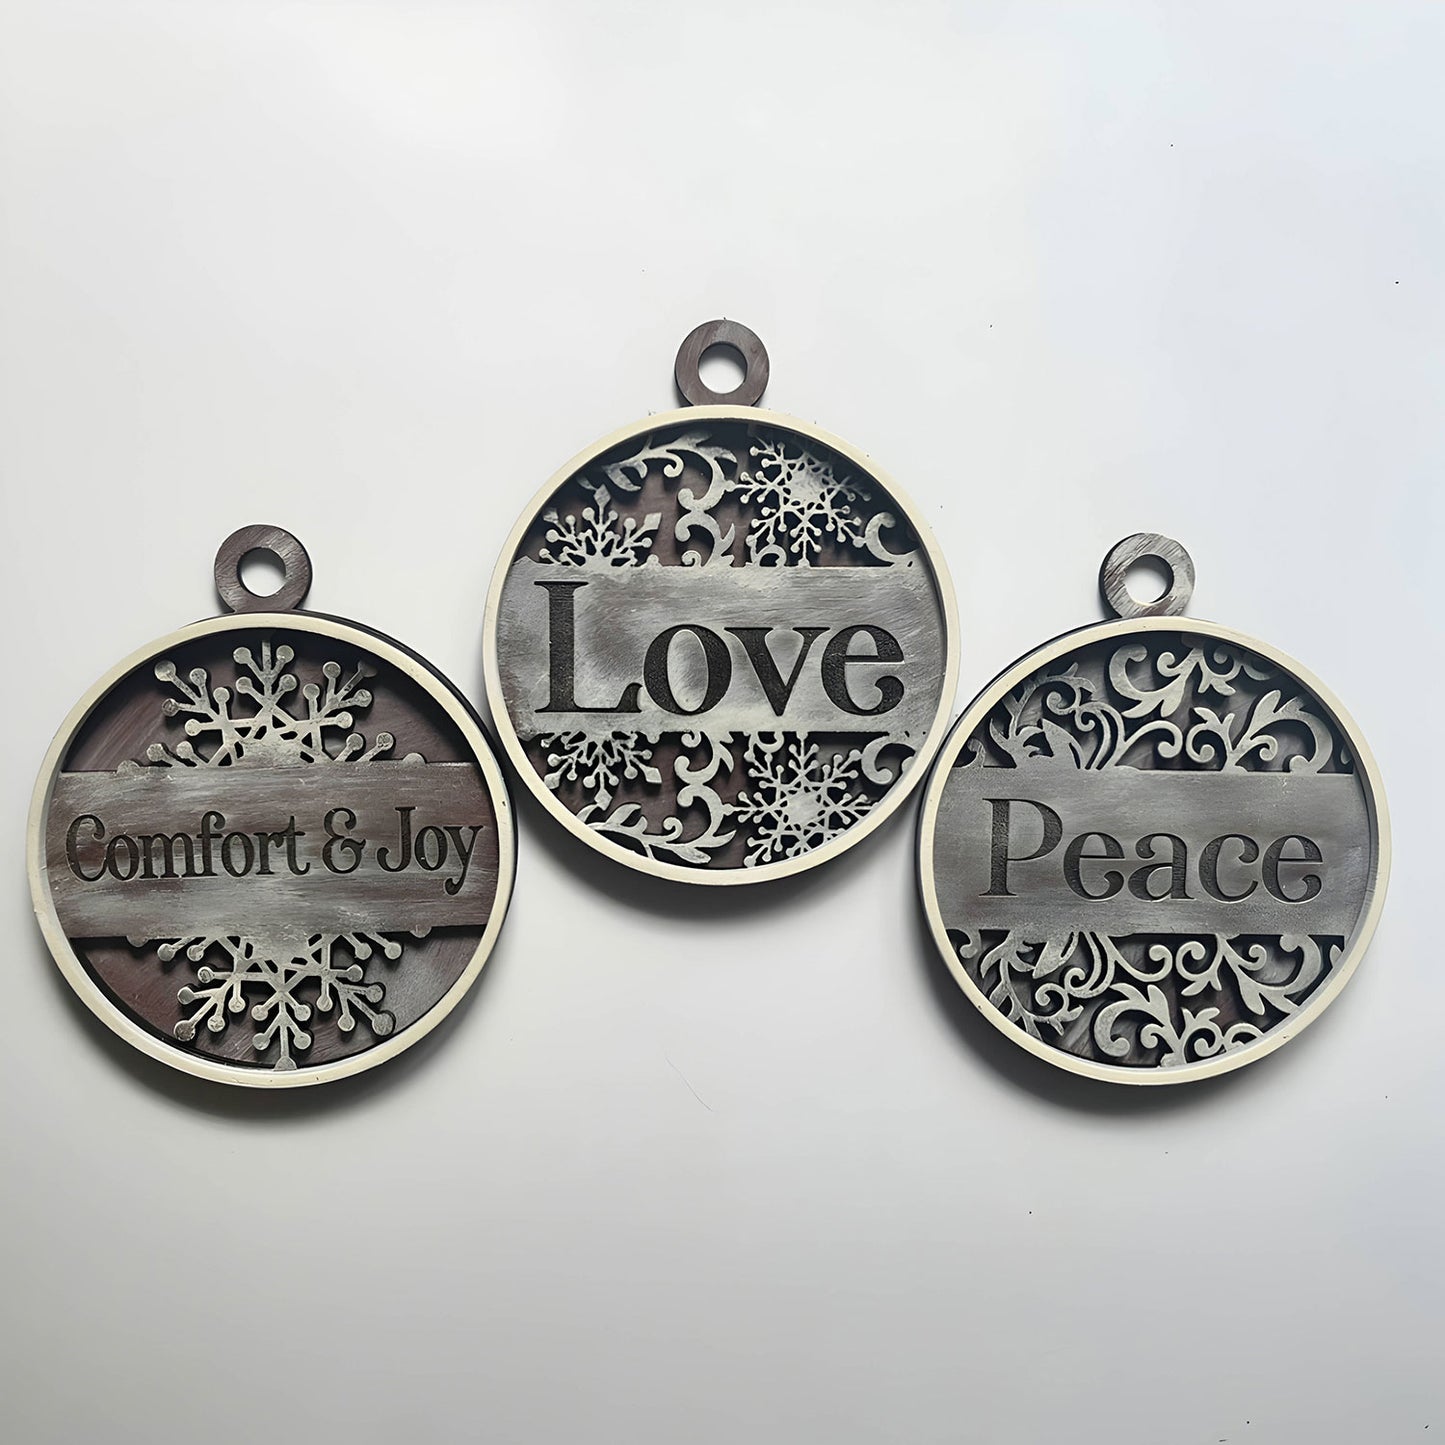 Engraved Flourish Ornaments - "Comfort and Joy"